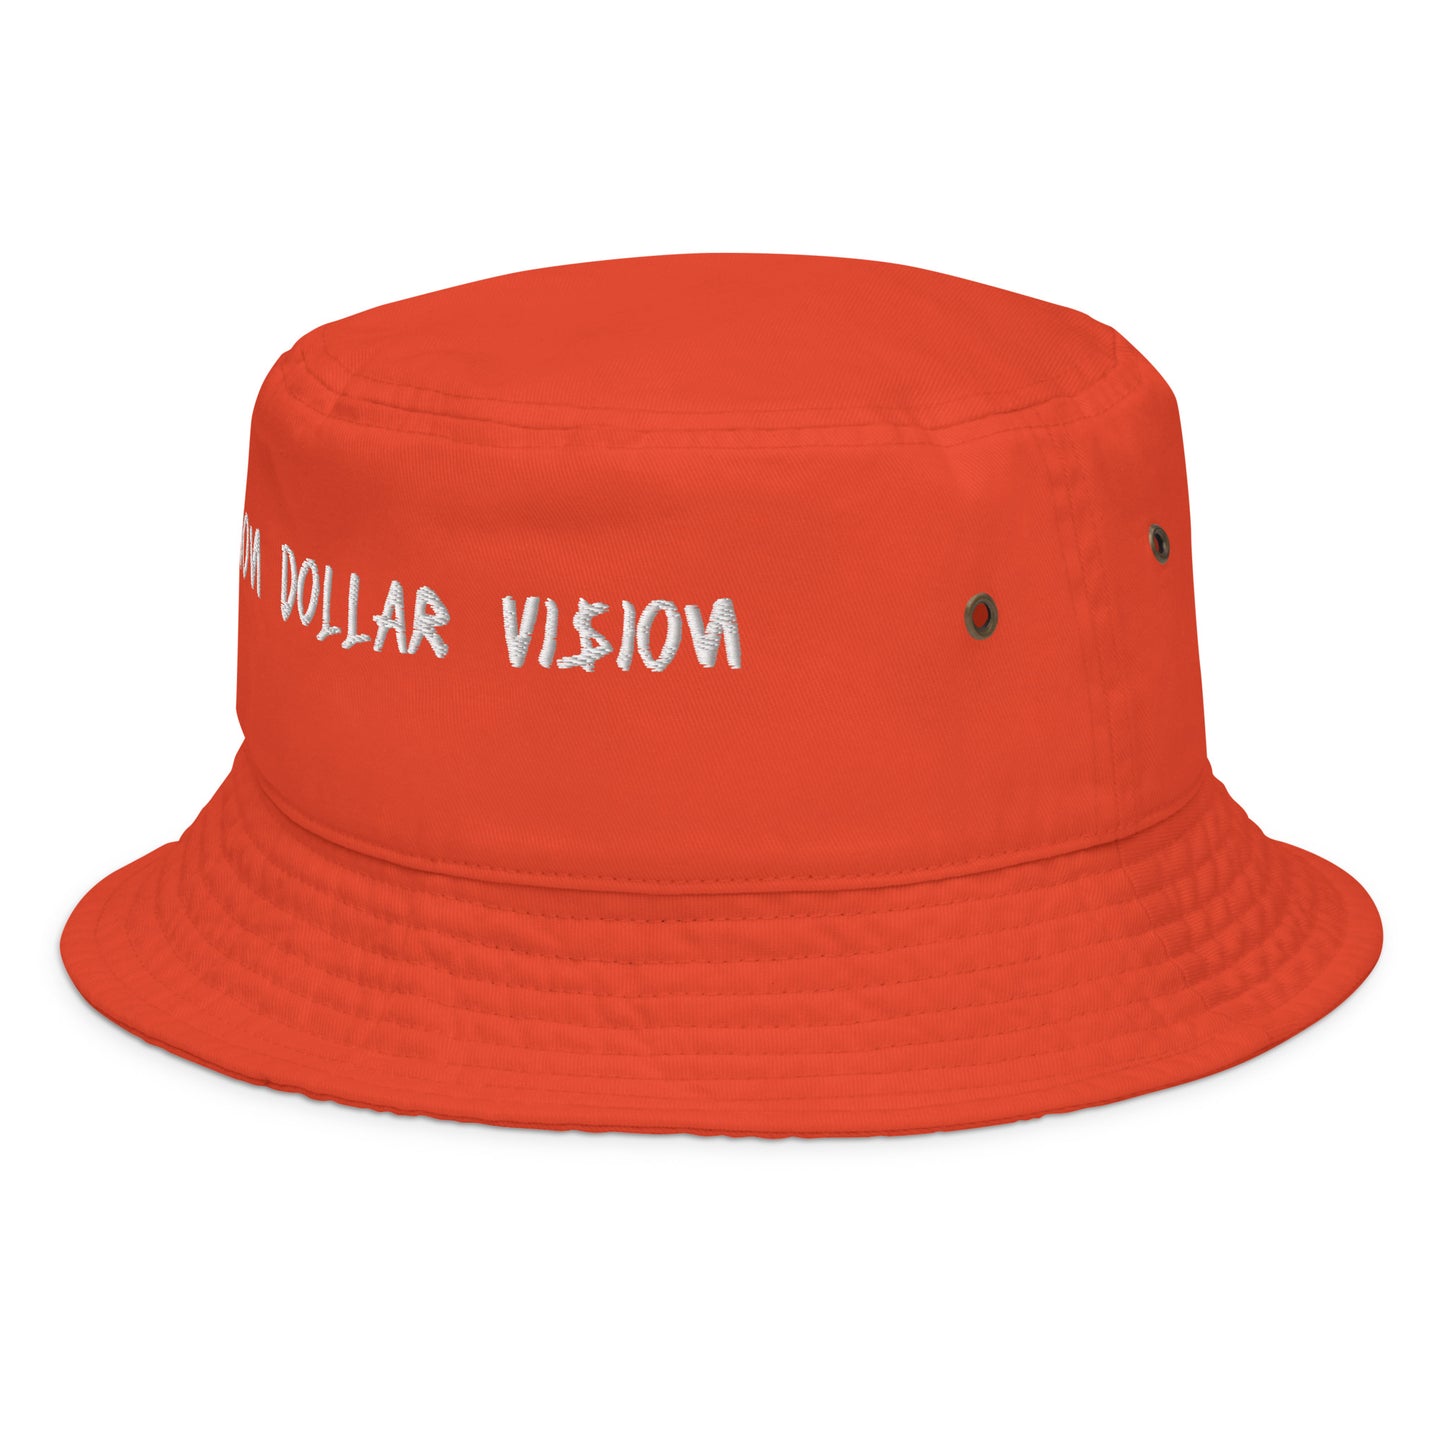 Million Dollar Vision bucket hat